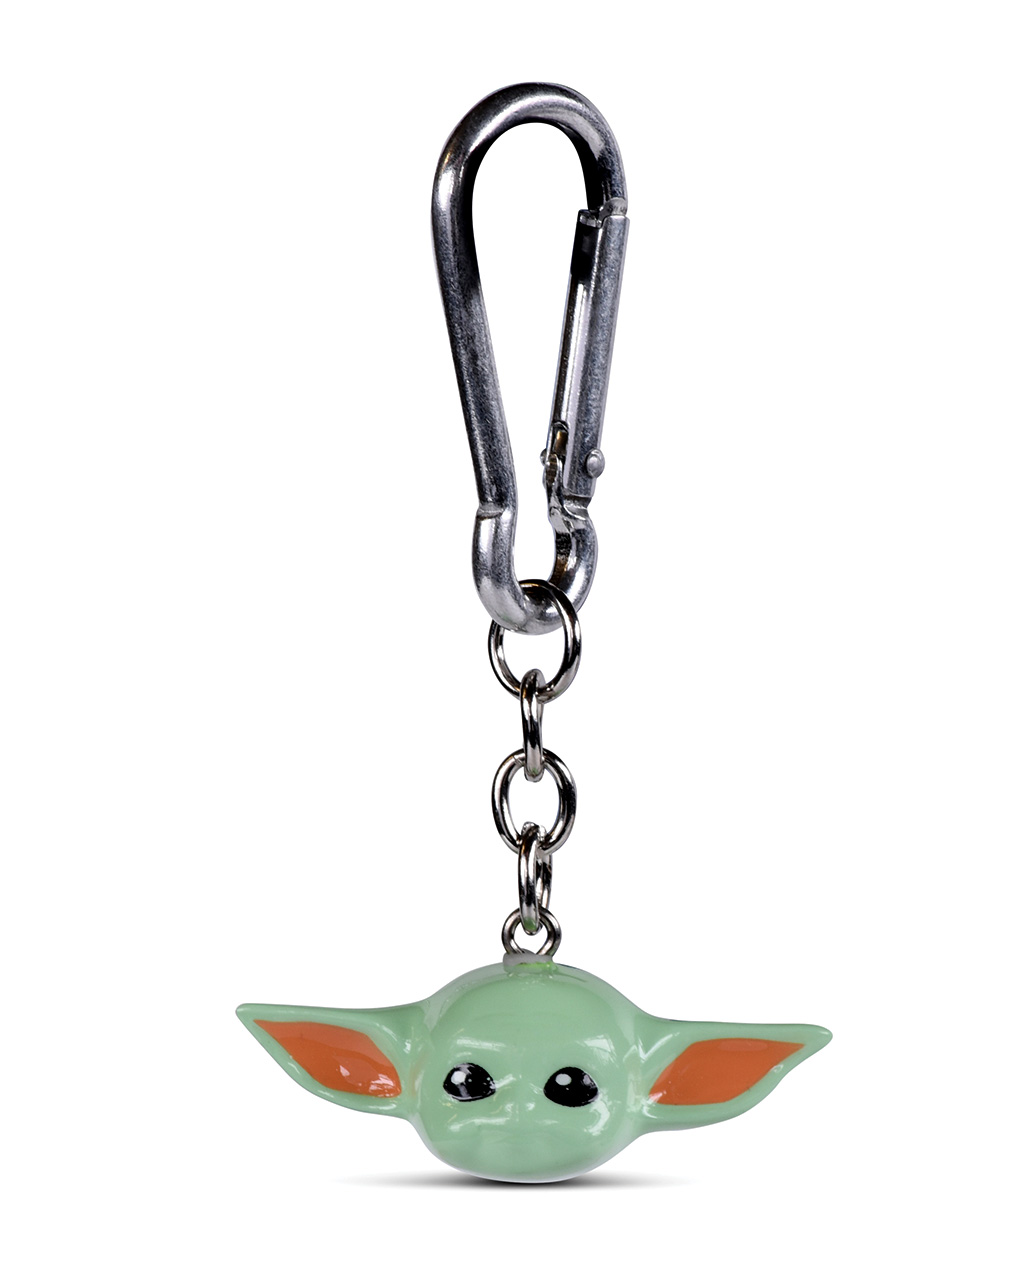 Baby Yoda Keychain The Mandalorian Star Wars Key Holder Baby Yoda Gifts Ornament